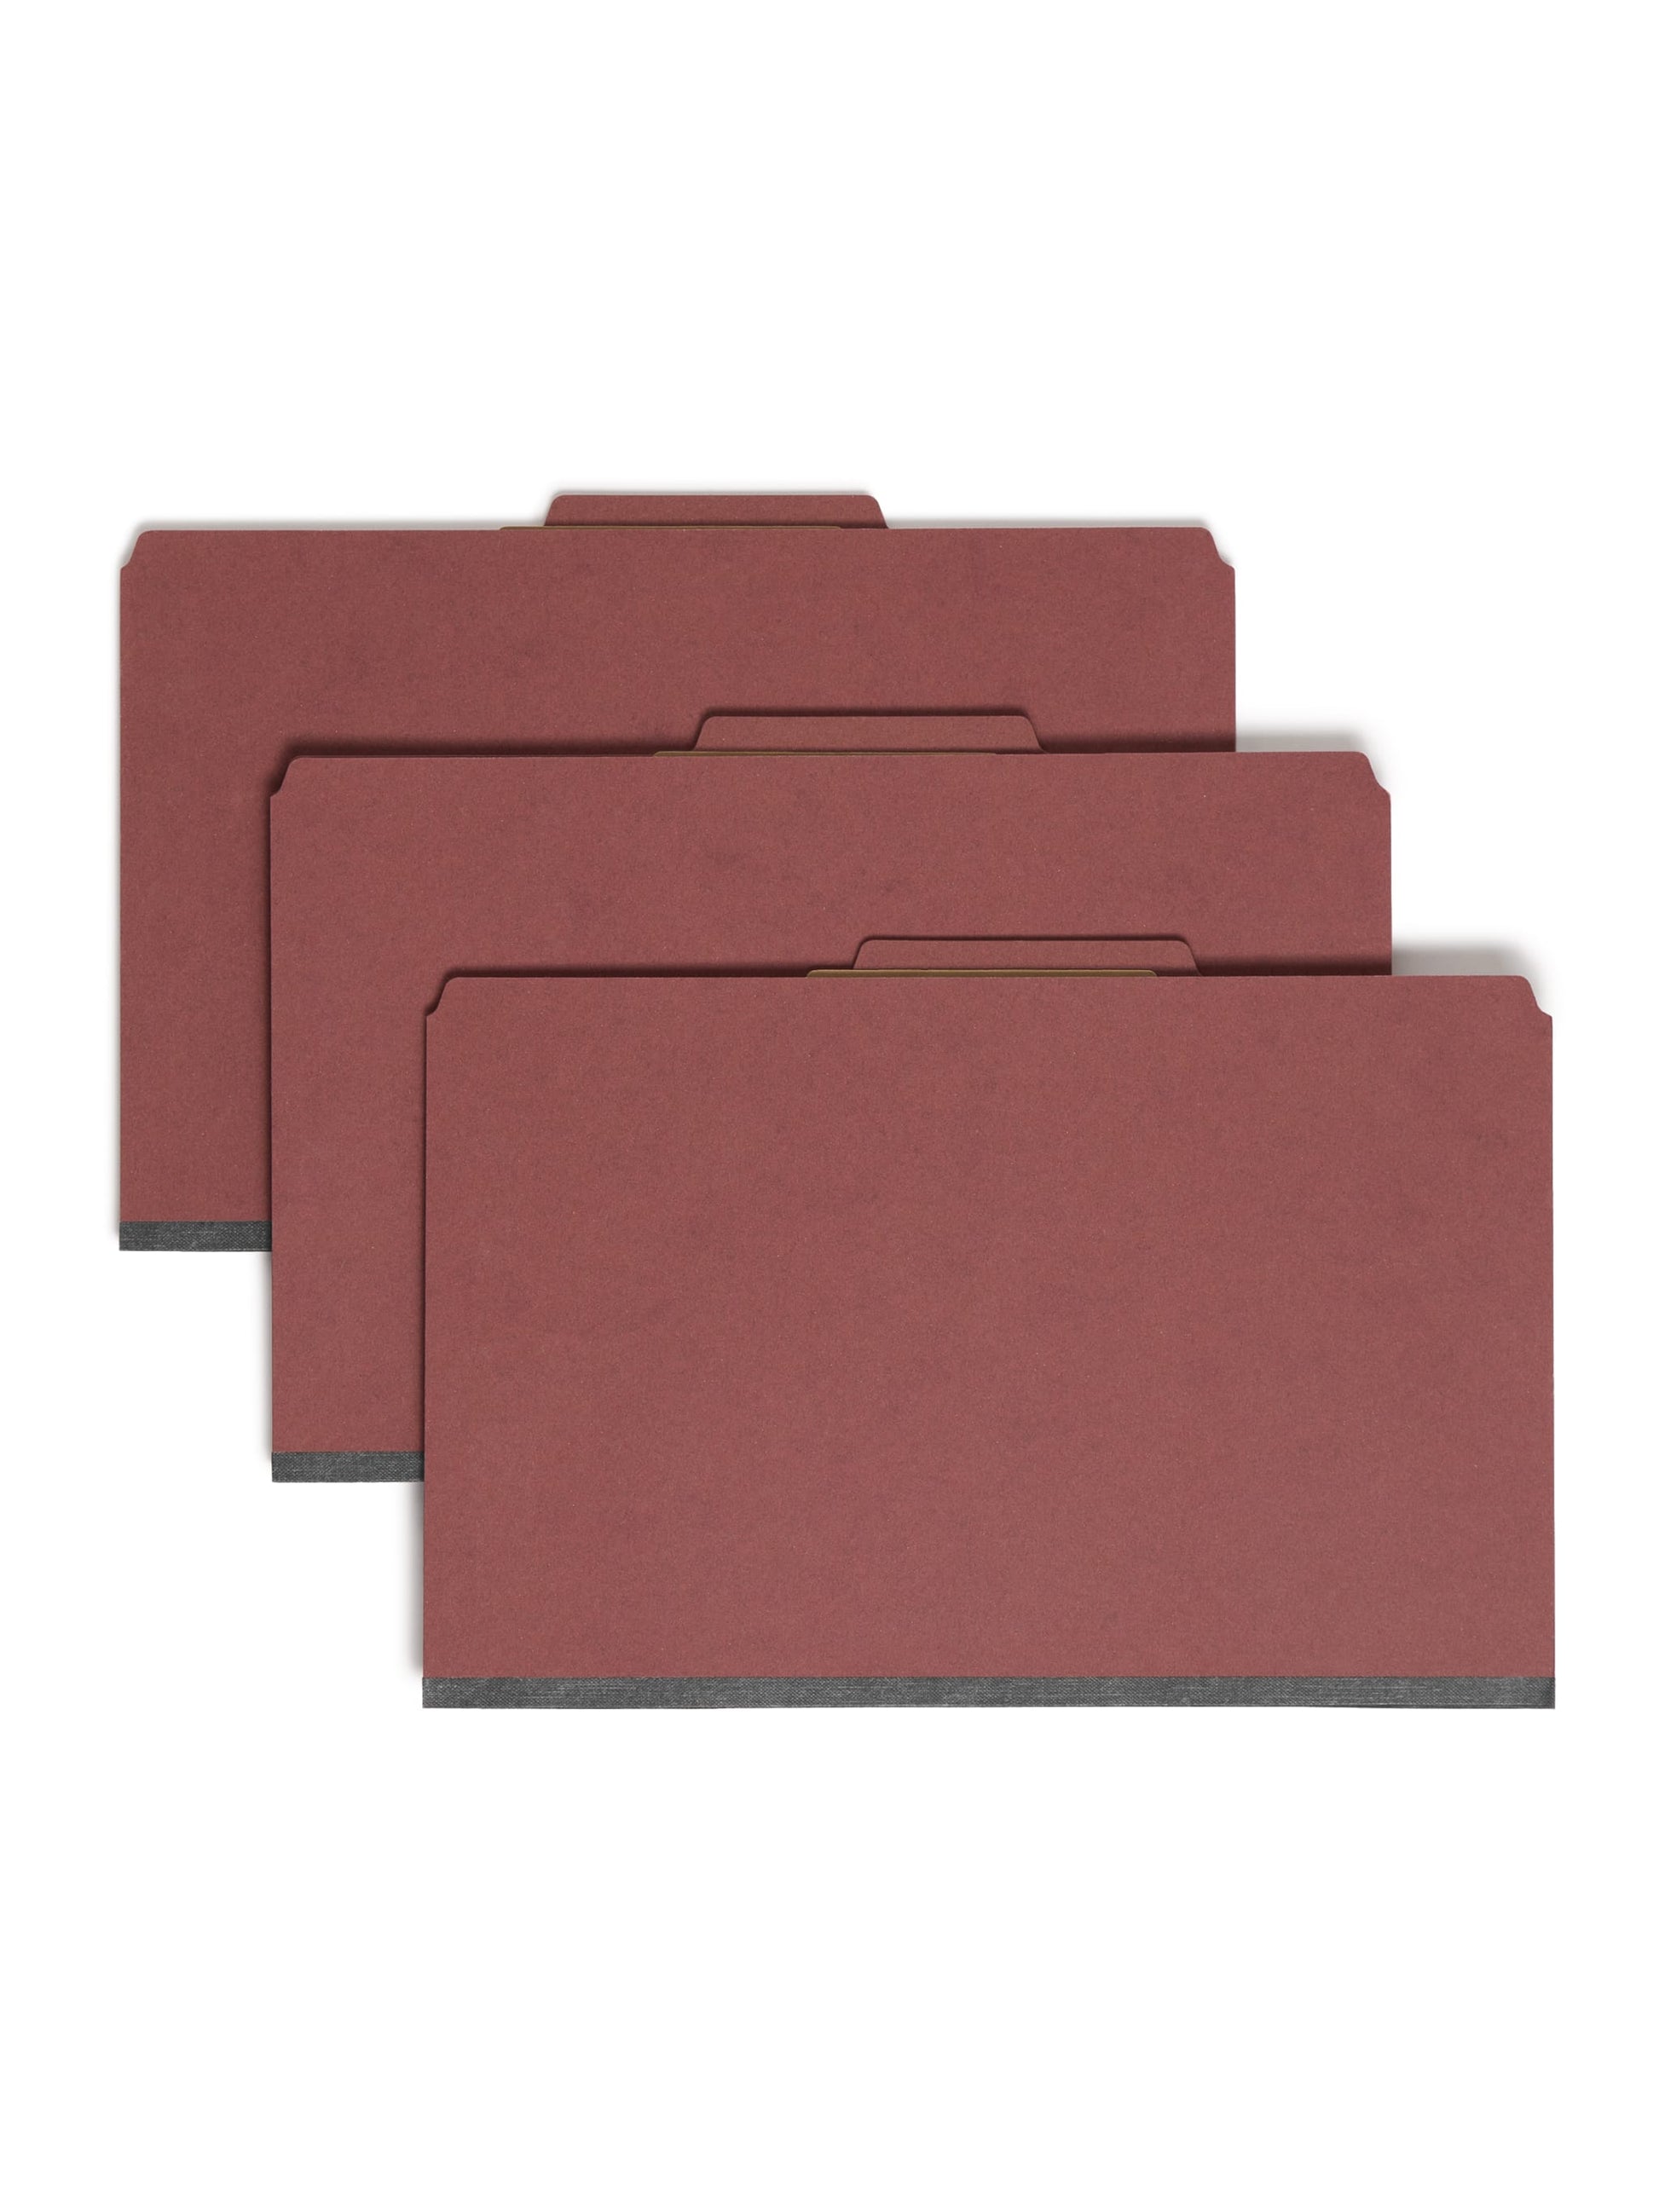 SafeSHIELD® Pressboard Classification File Folders, 1 Divider, 2 inch Expansion, Red Color, Legal Size, 